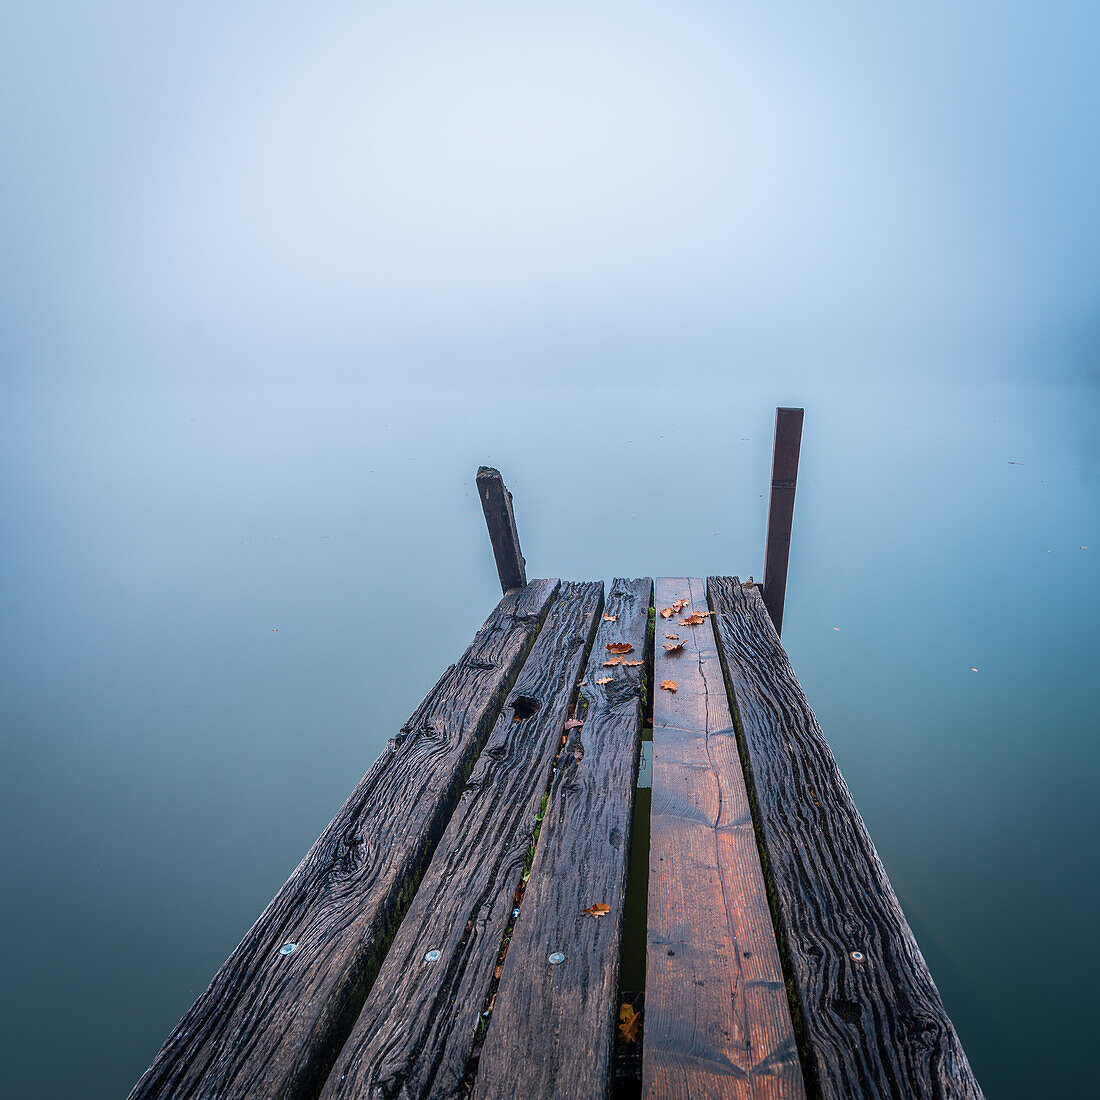 Badesteg im Nebel; Husemer See, Kanton Zürich, Schweiz